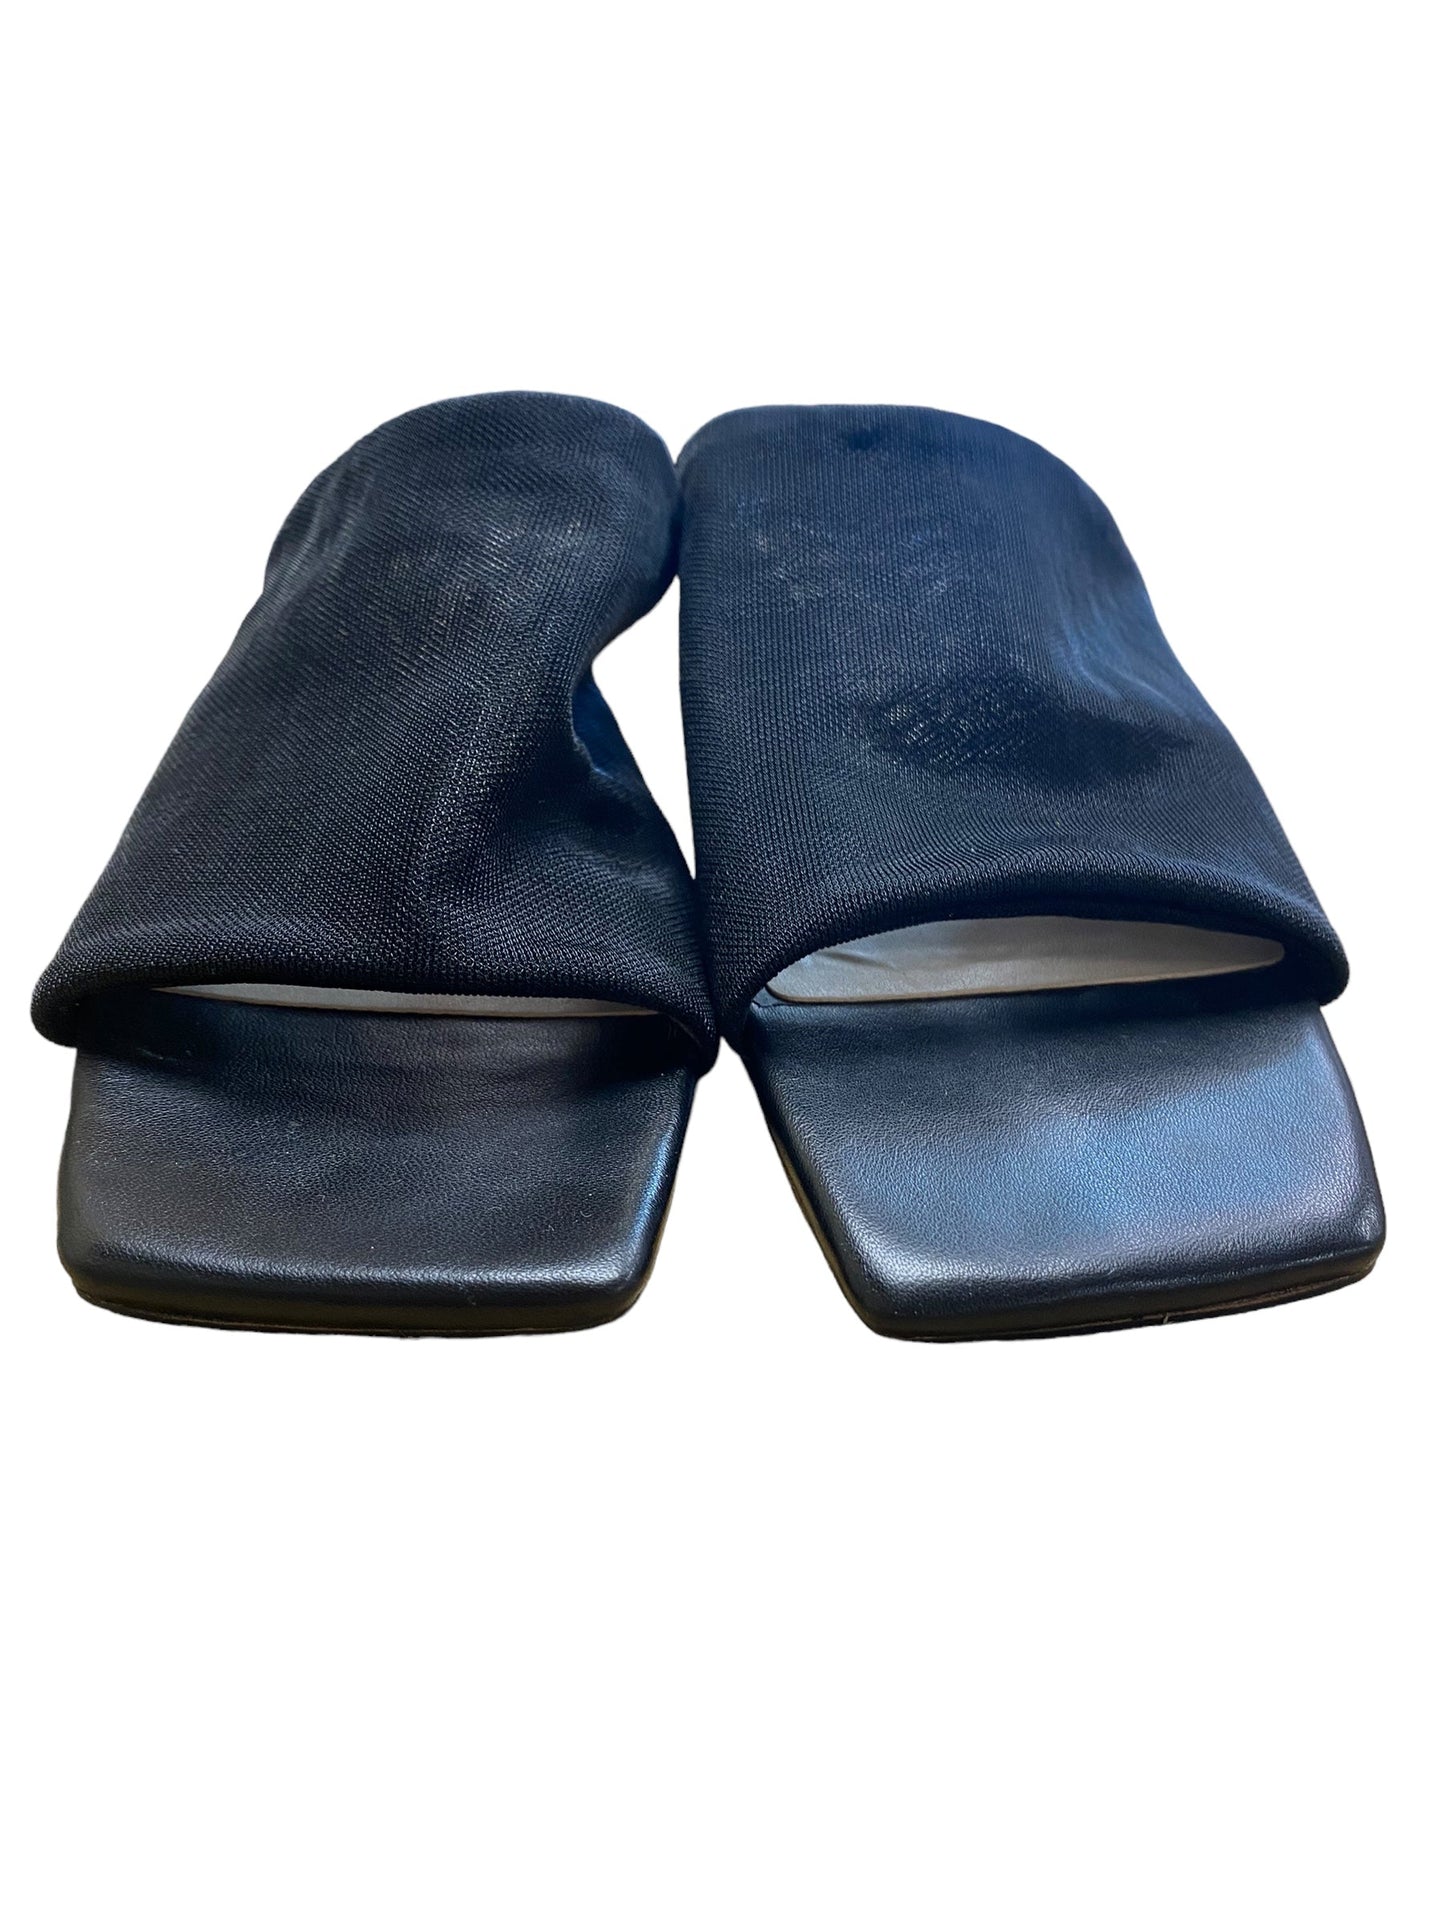 Black Shoes Heels Block Vince Camuto, Size 8.5